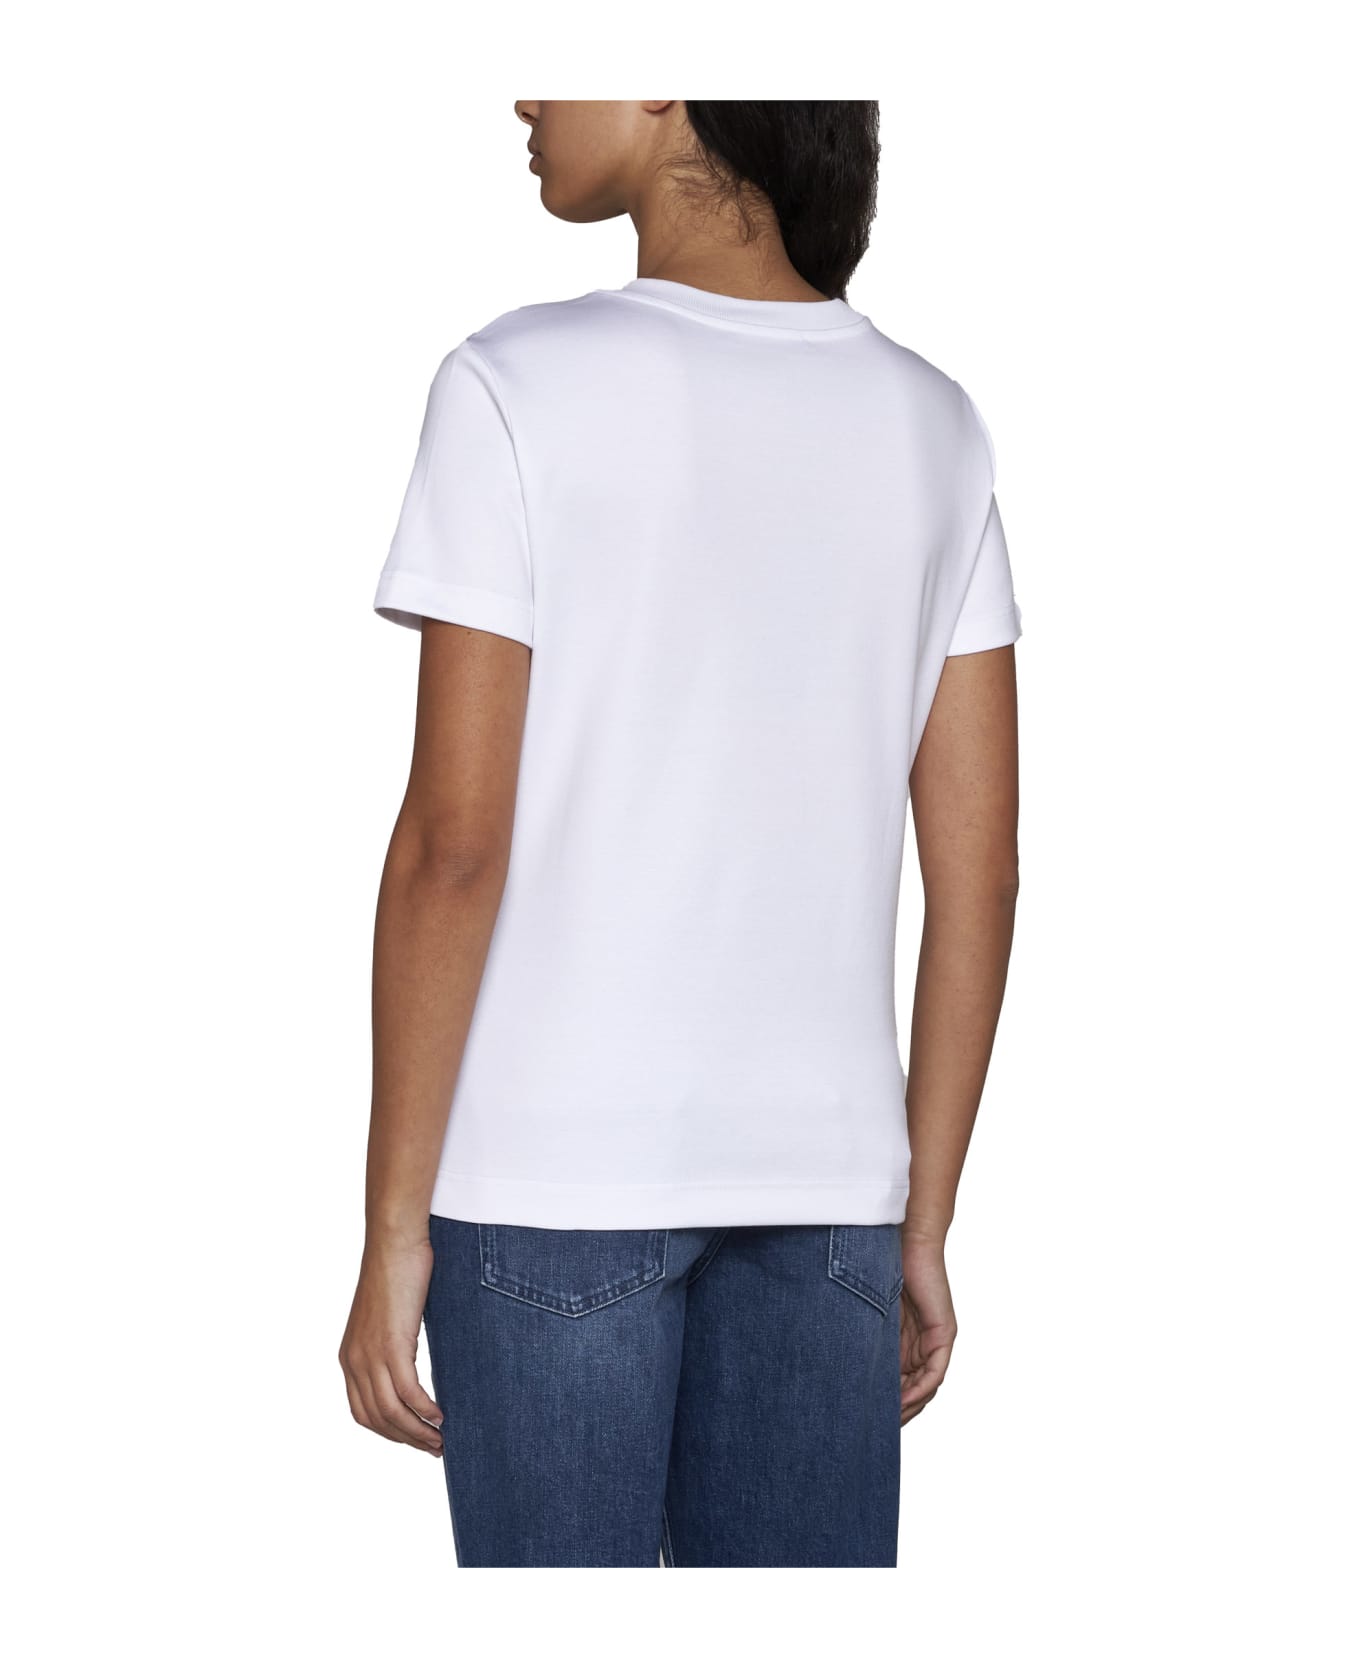 DOLCE & GABBANA PATTERNED OPEN-SHOULDER DRESS Cotton T-shirt With Dg Logo - White